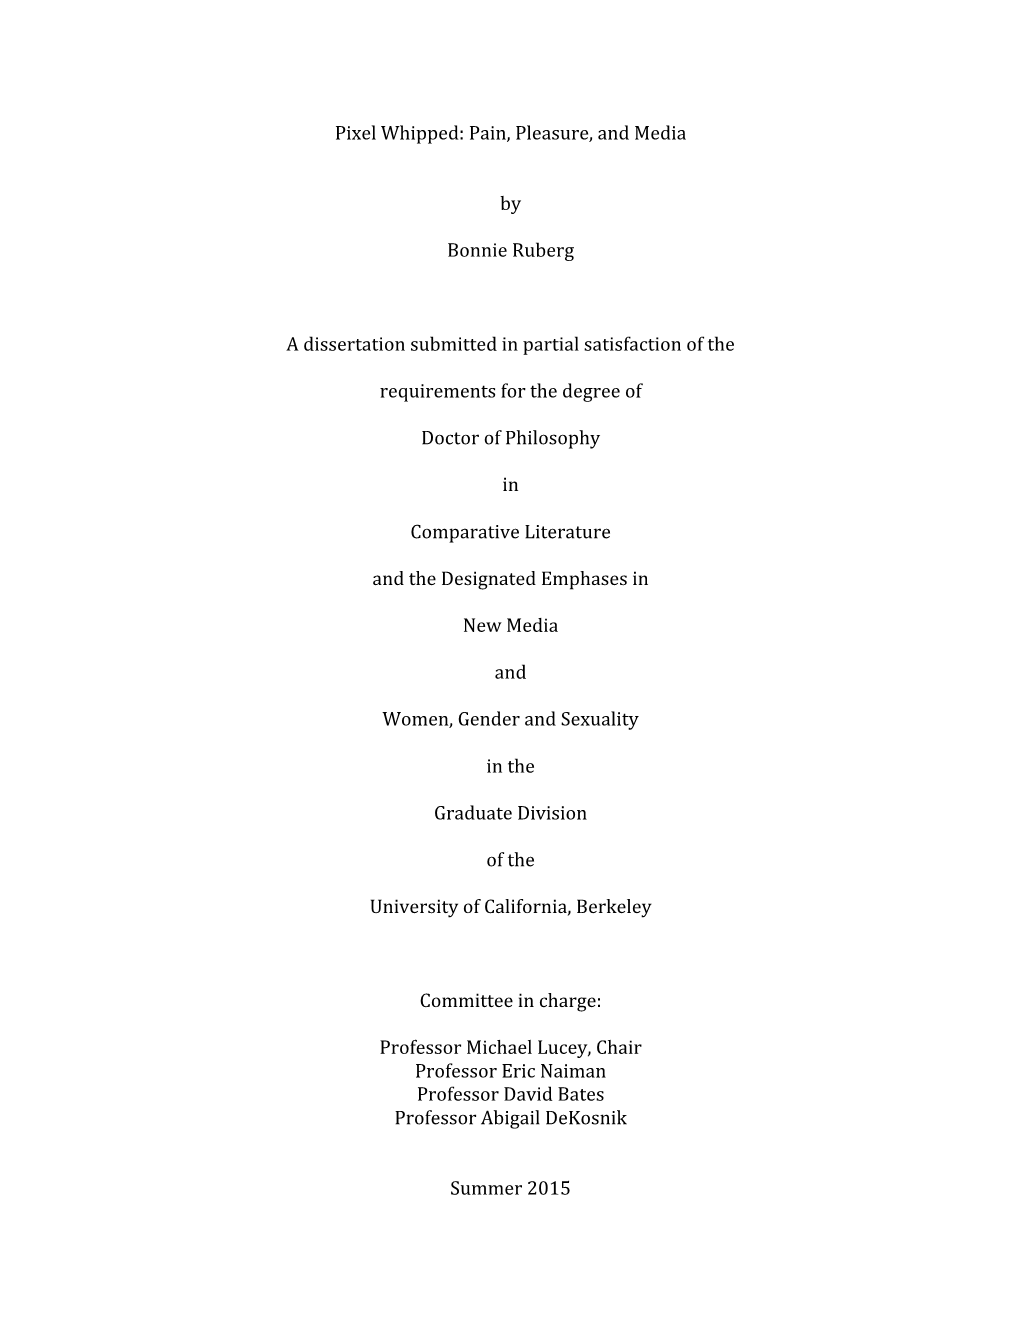 UPDATED Ruberg Full Dissertation PROQUEST Copy